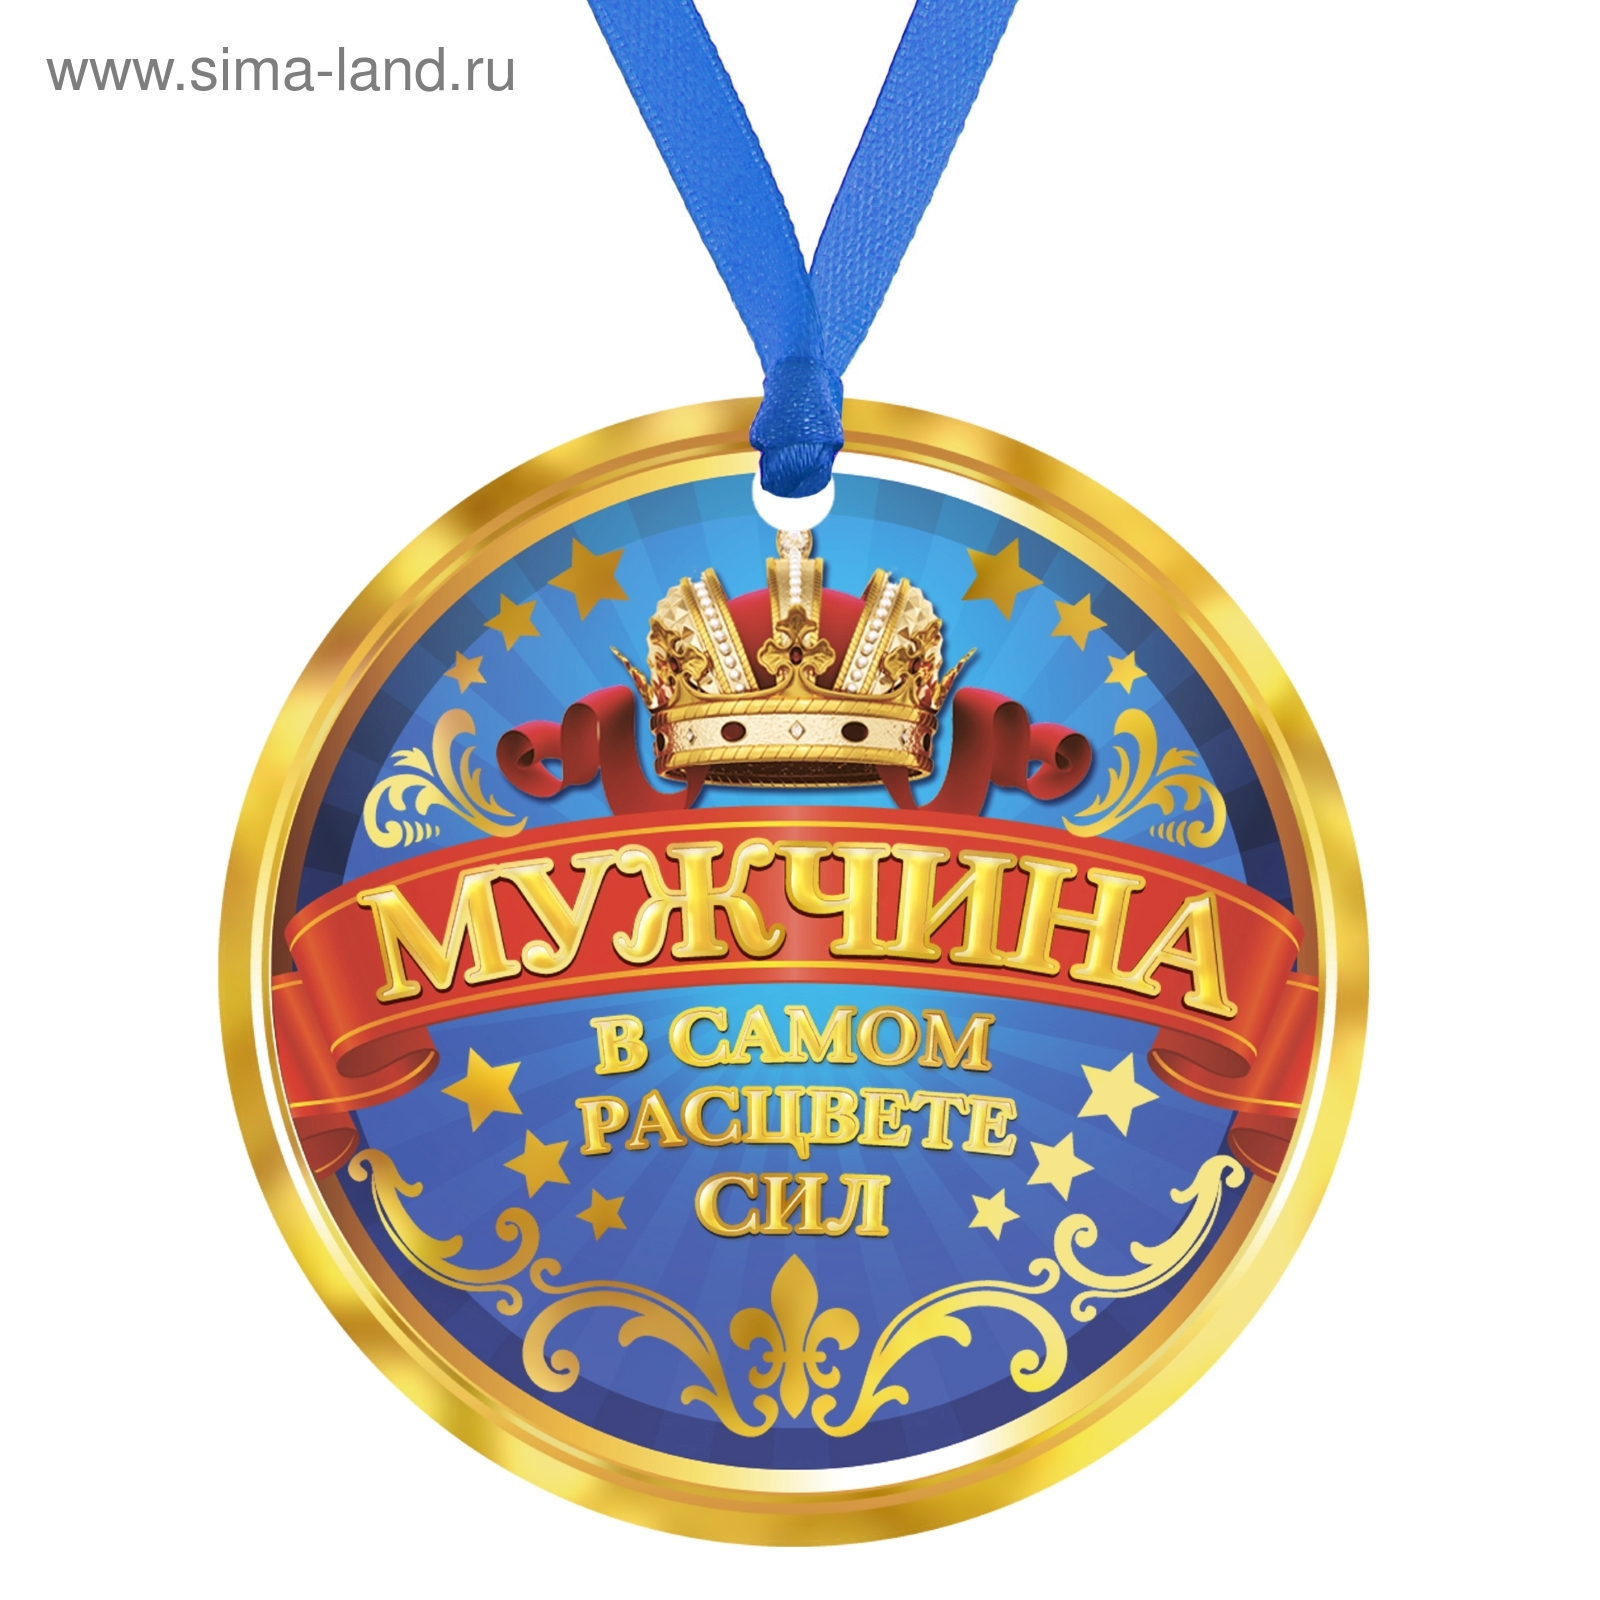 3 шт., медали-награды для мужчин, спортивный сувенир